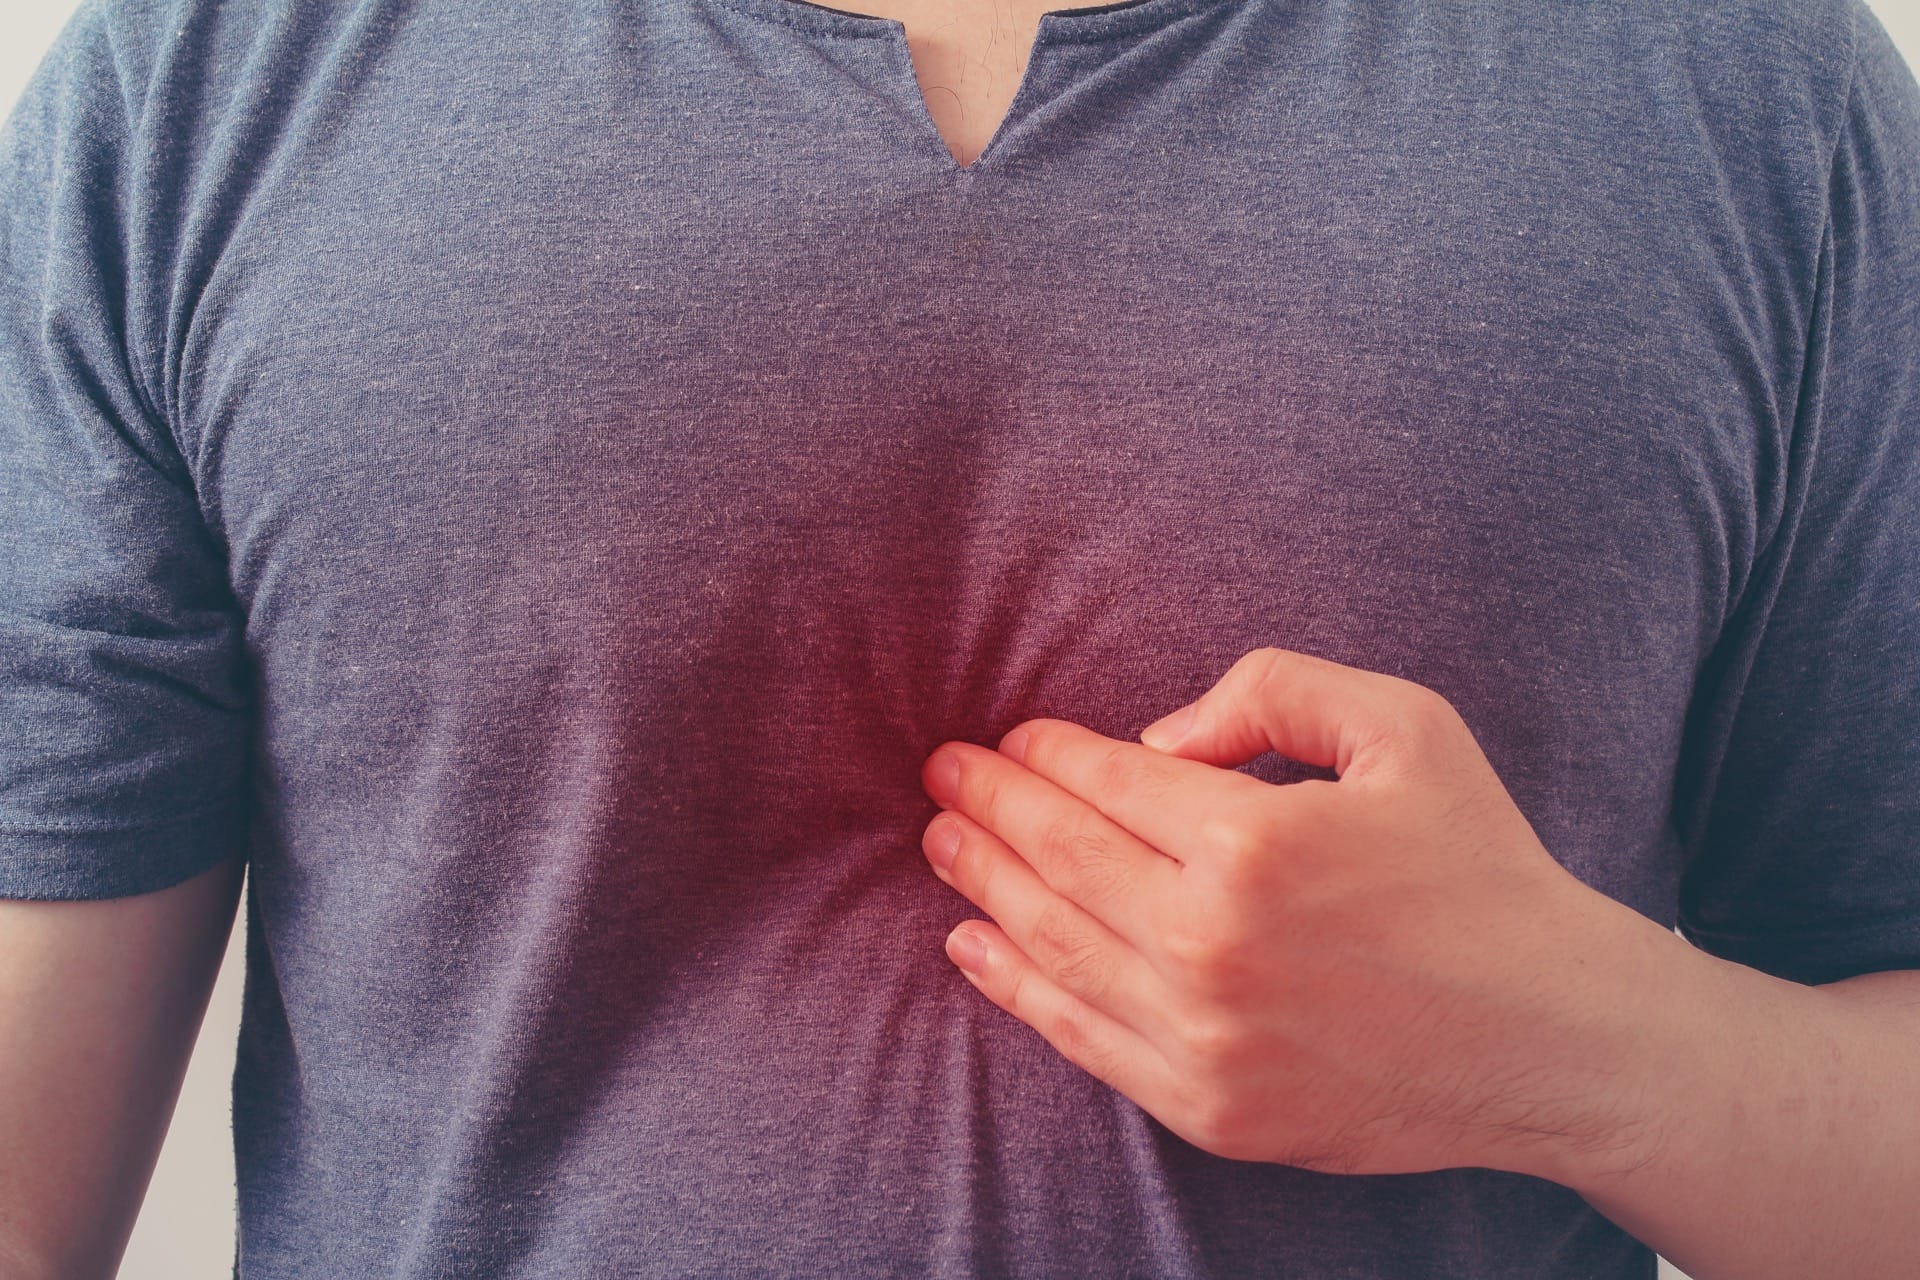 10 Ways to Prevent Help Prevent Heartburn